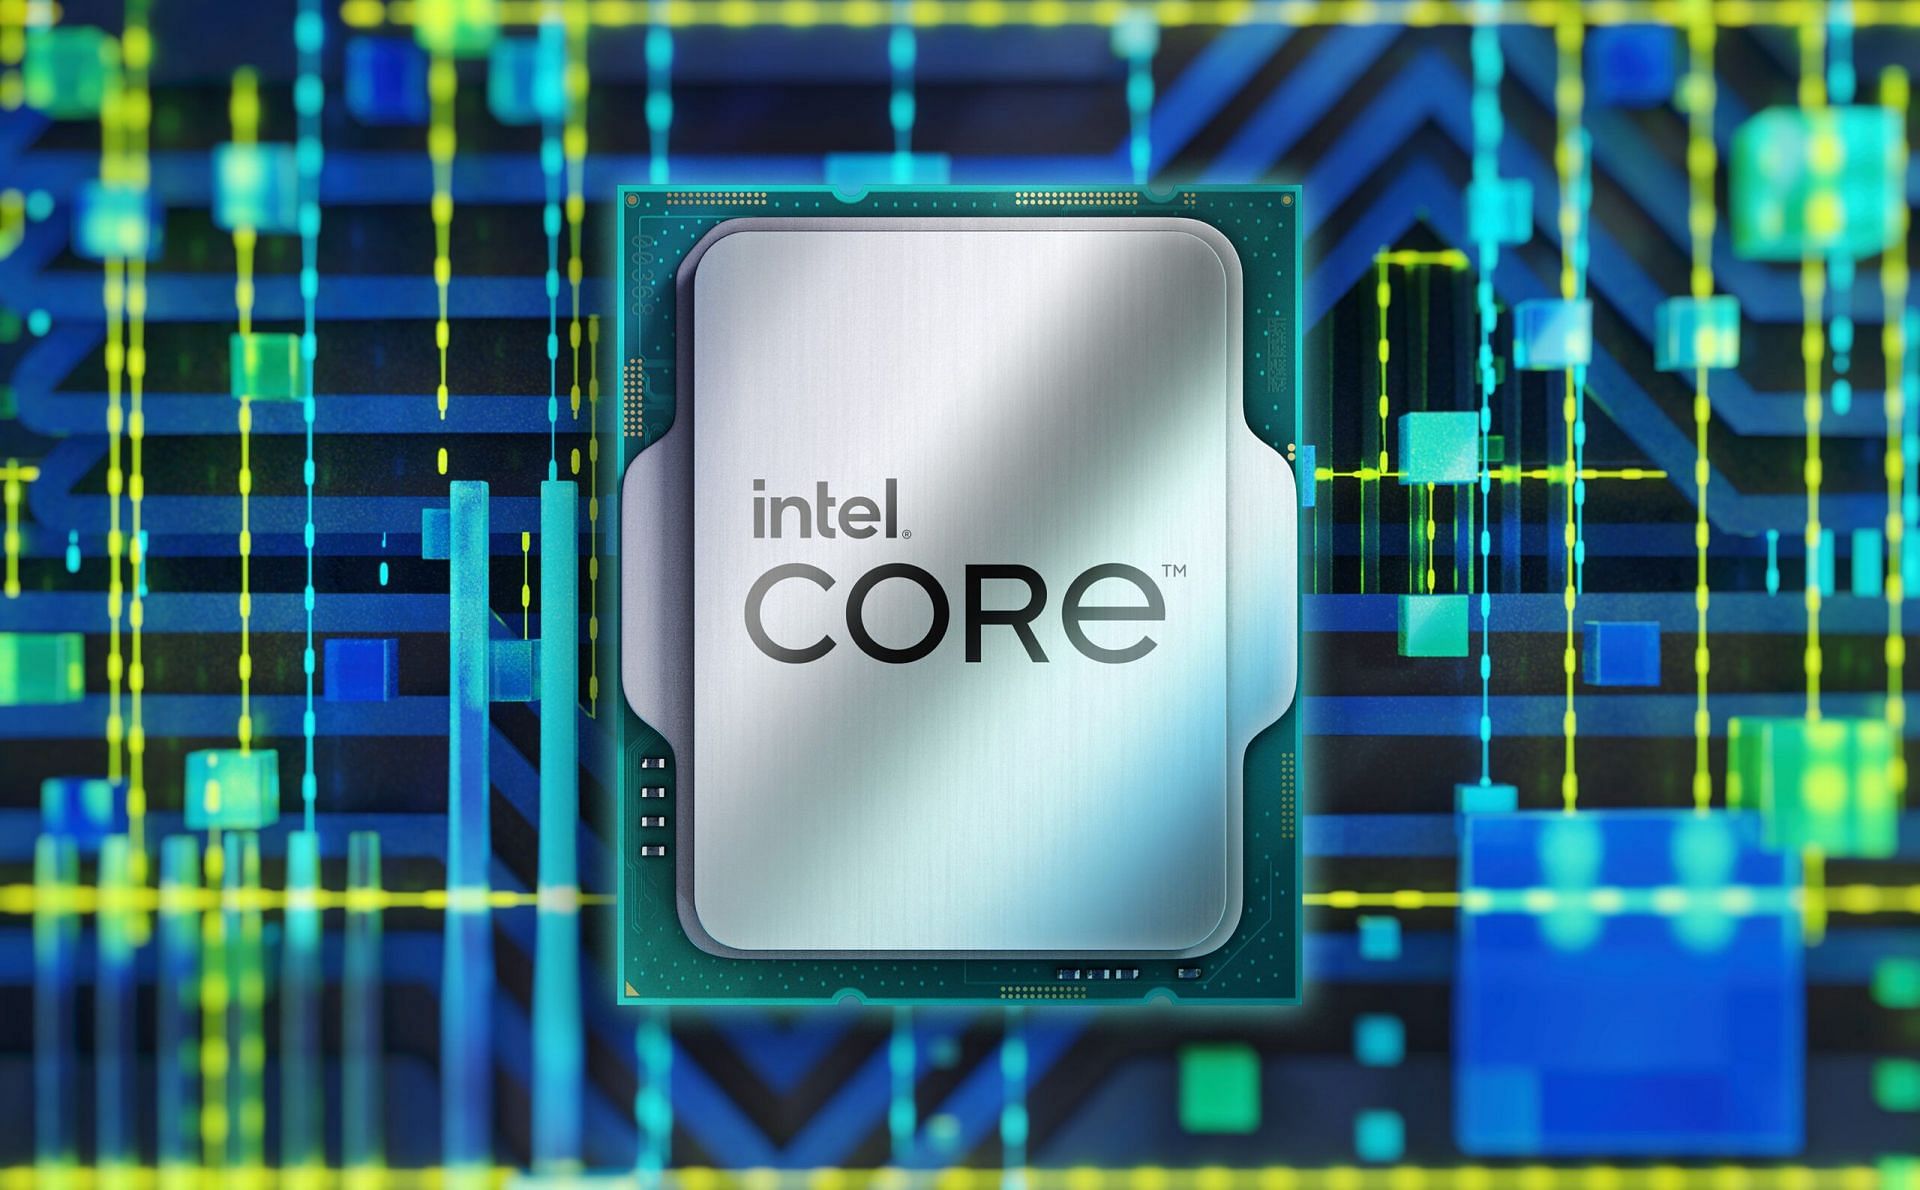 The updated Intel Core logo (Image via Intel)